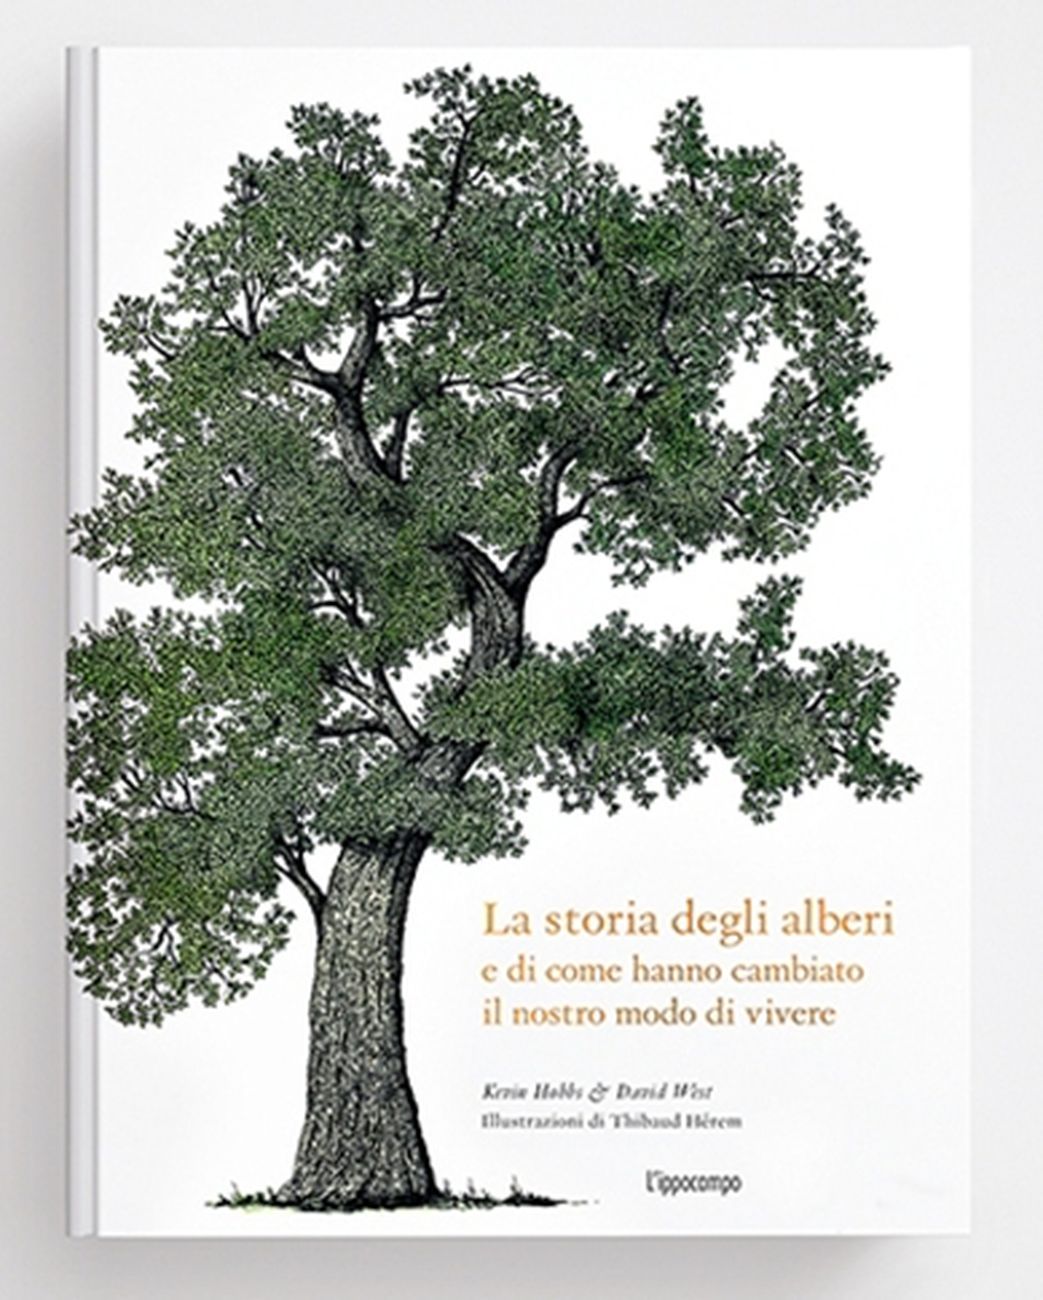 Kevin Hobbs & David West – La storia degli alberi (L'ippocampo, Milano 2020)